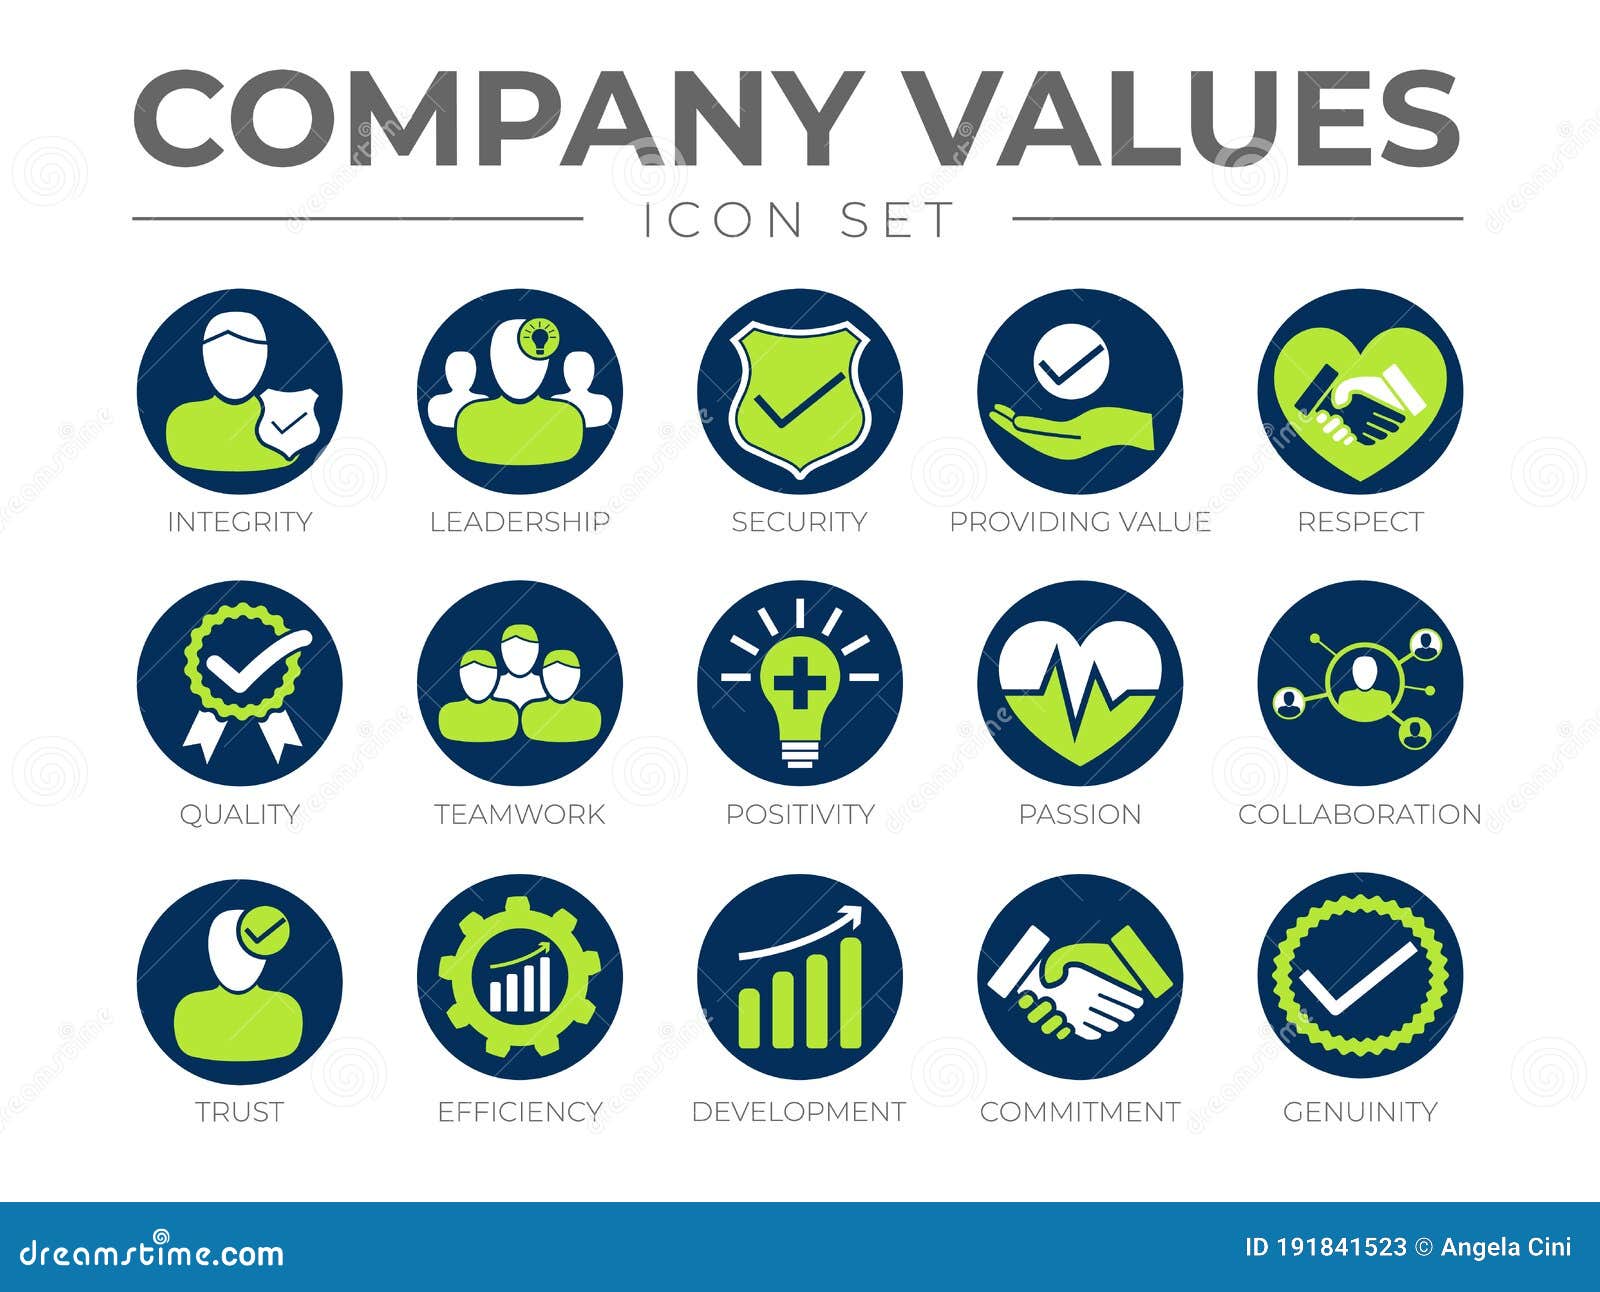 company core values round icon set. integrity, leadership, security, providing value, respect, quality, teamwork, positivity,